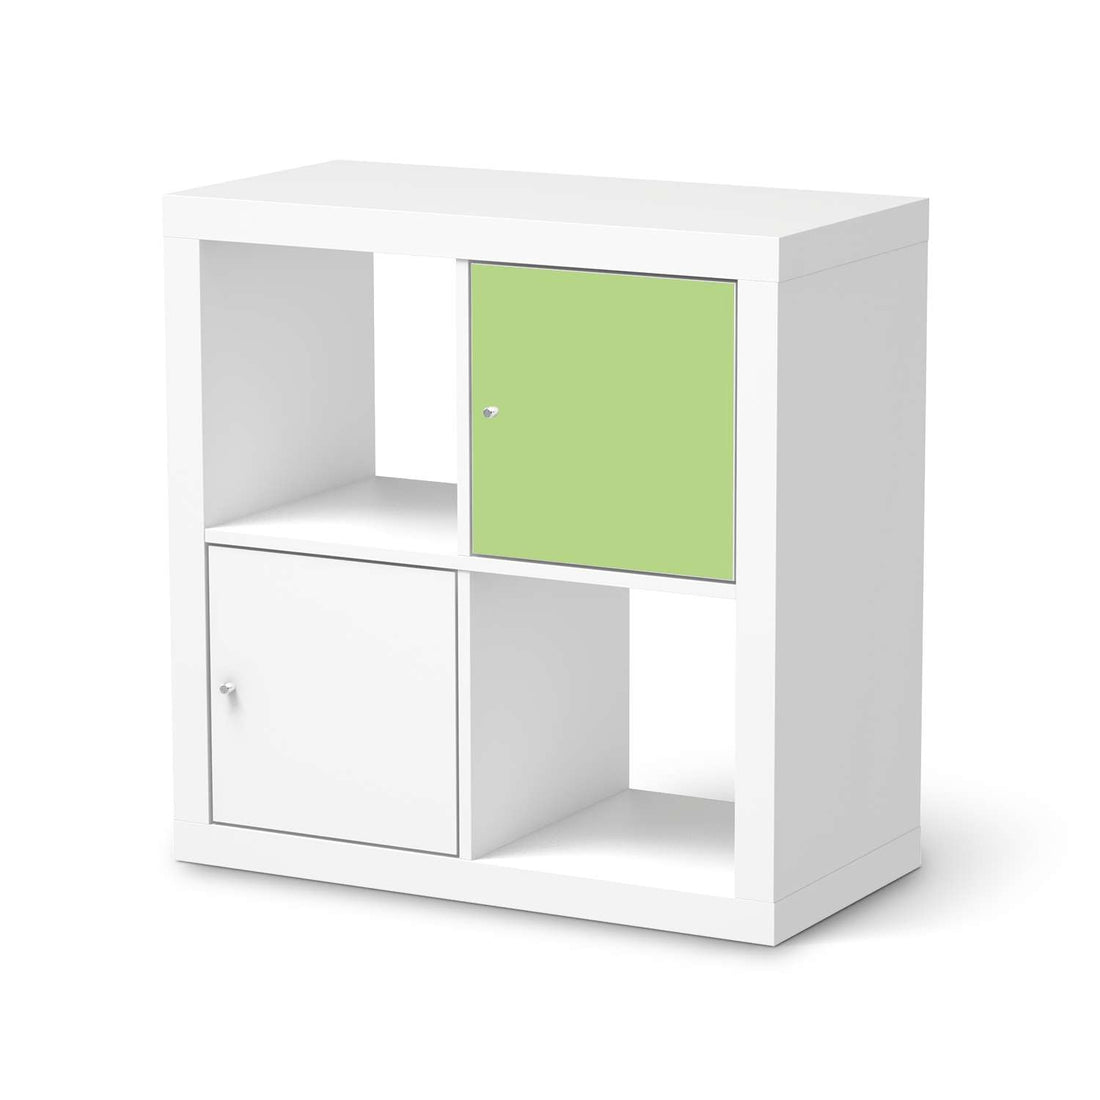 Selbstklebende Folie Hellgrün Light - IKEA Kallax Regal 1 Türe  - weiss